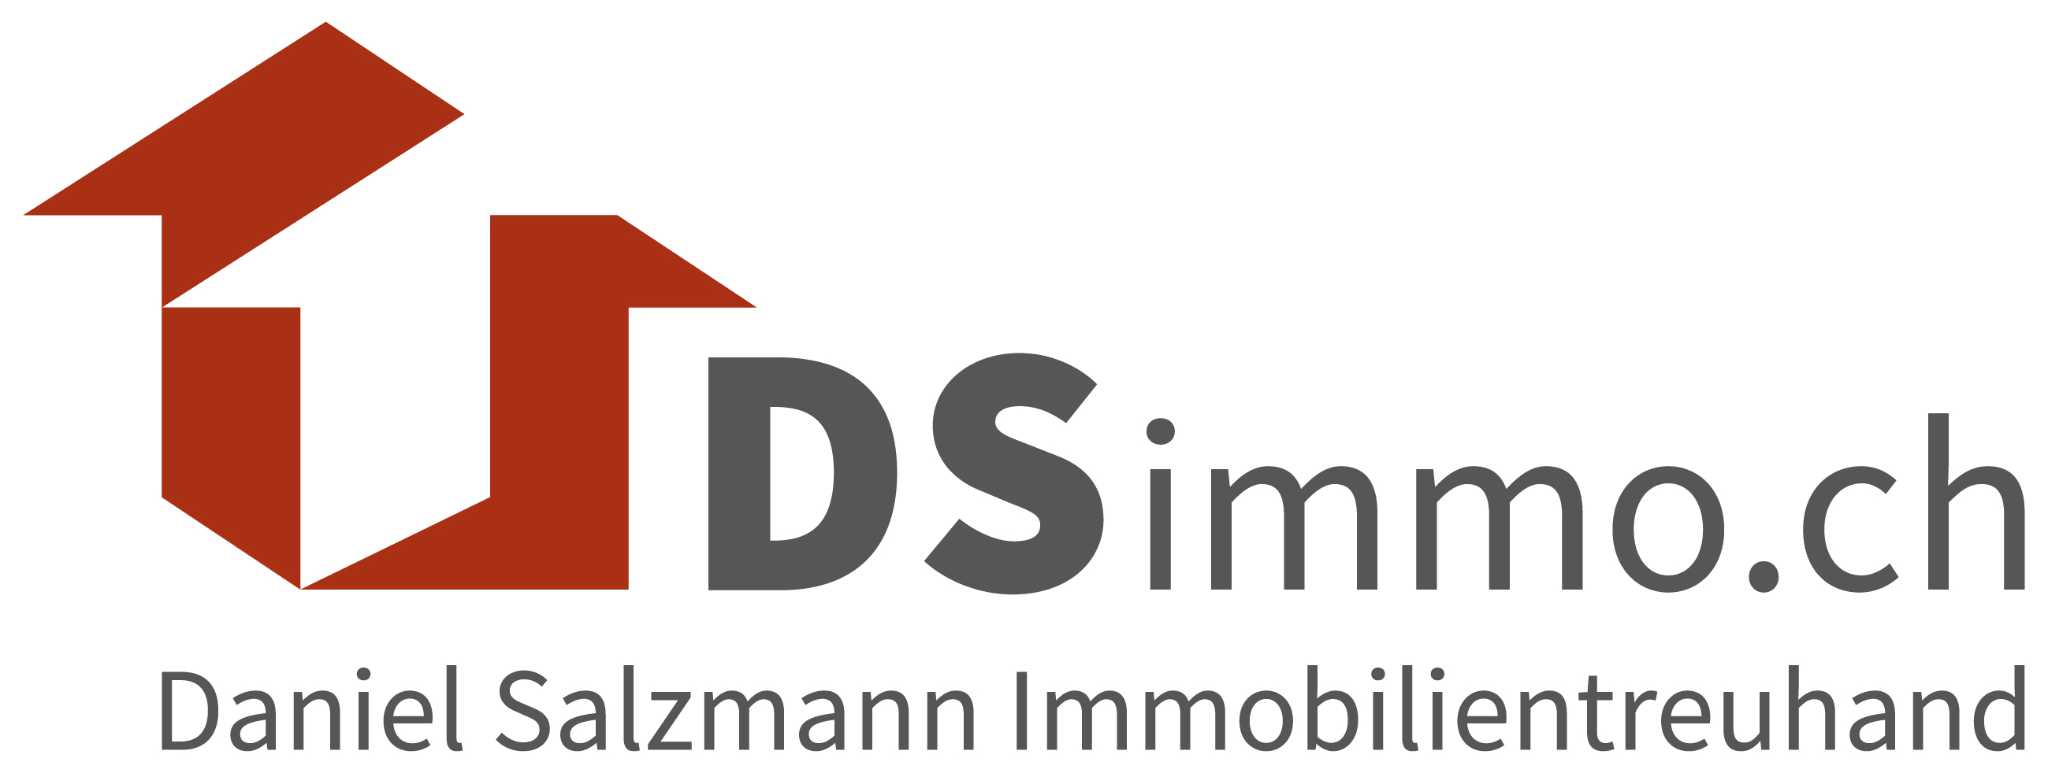 Daniel Salzmann Immobilientreuhand GmbH